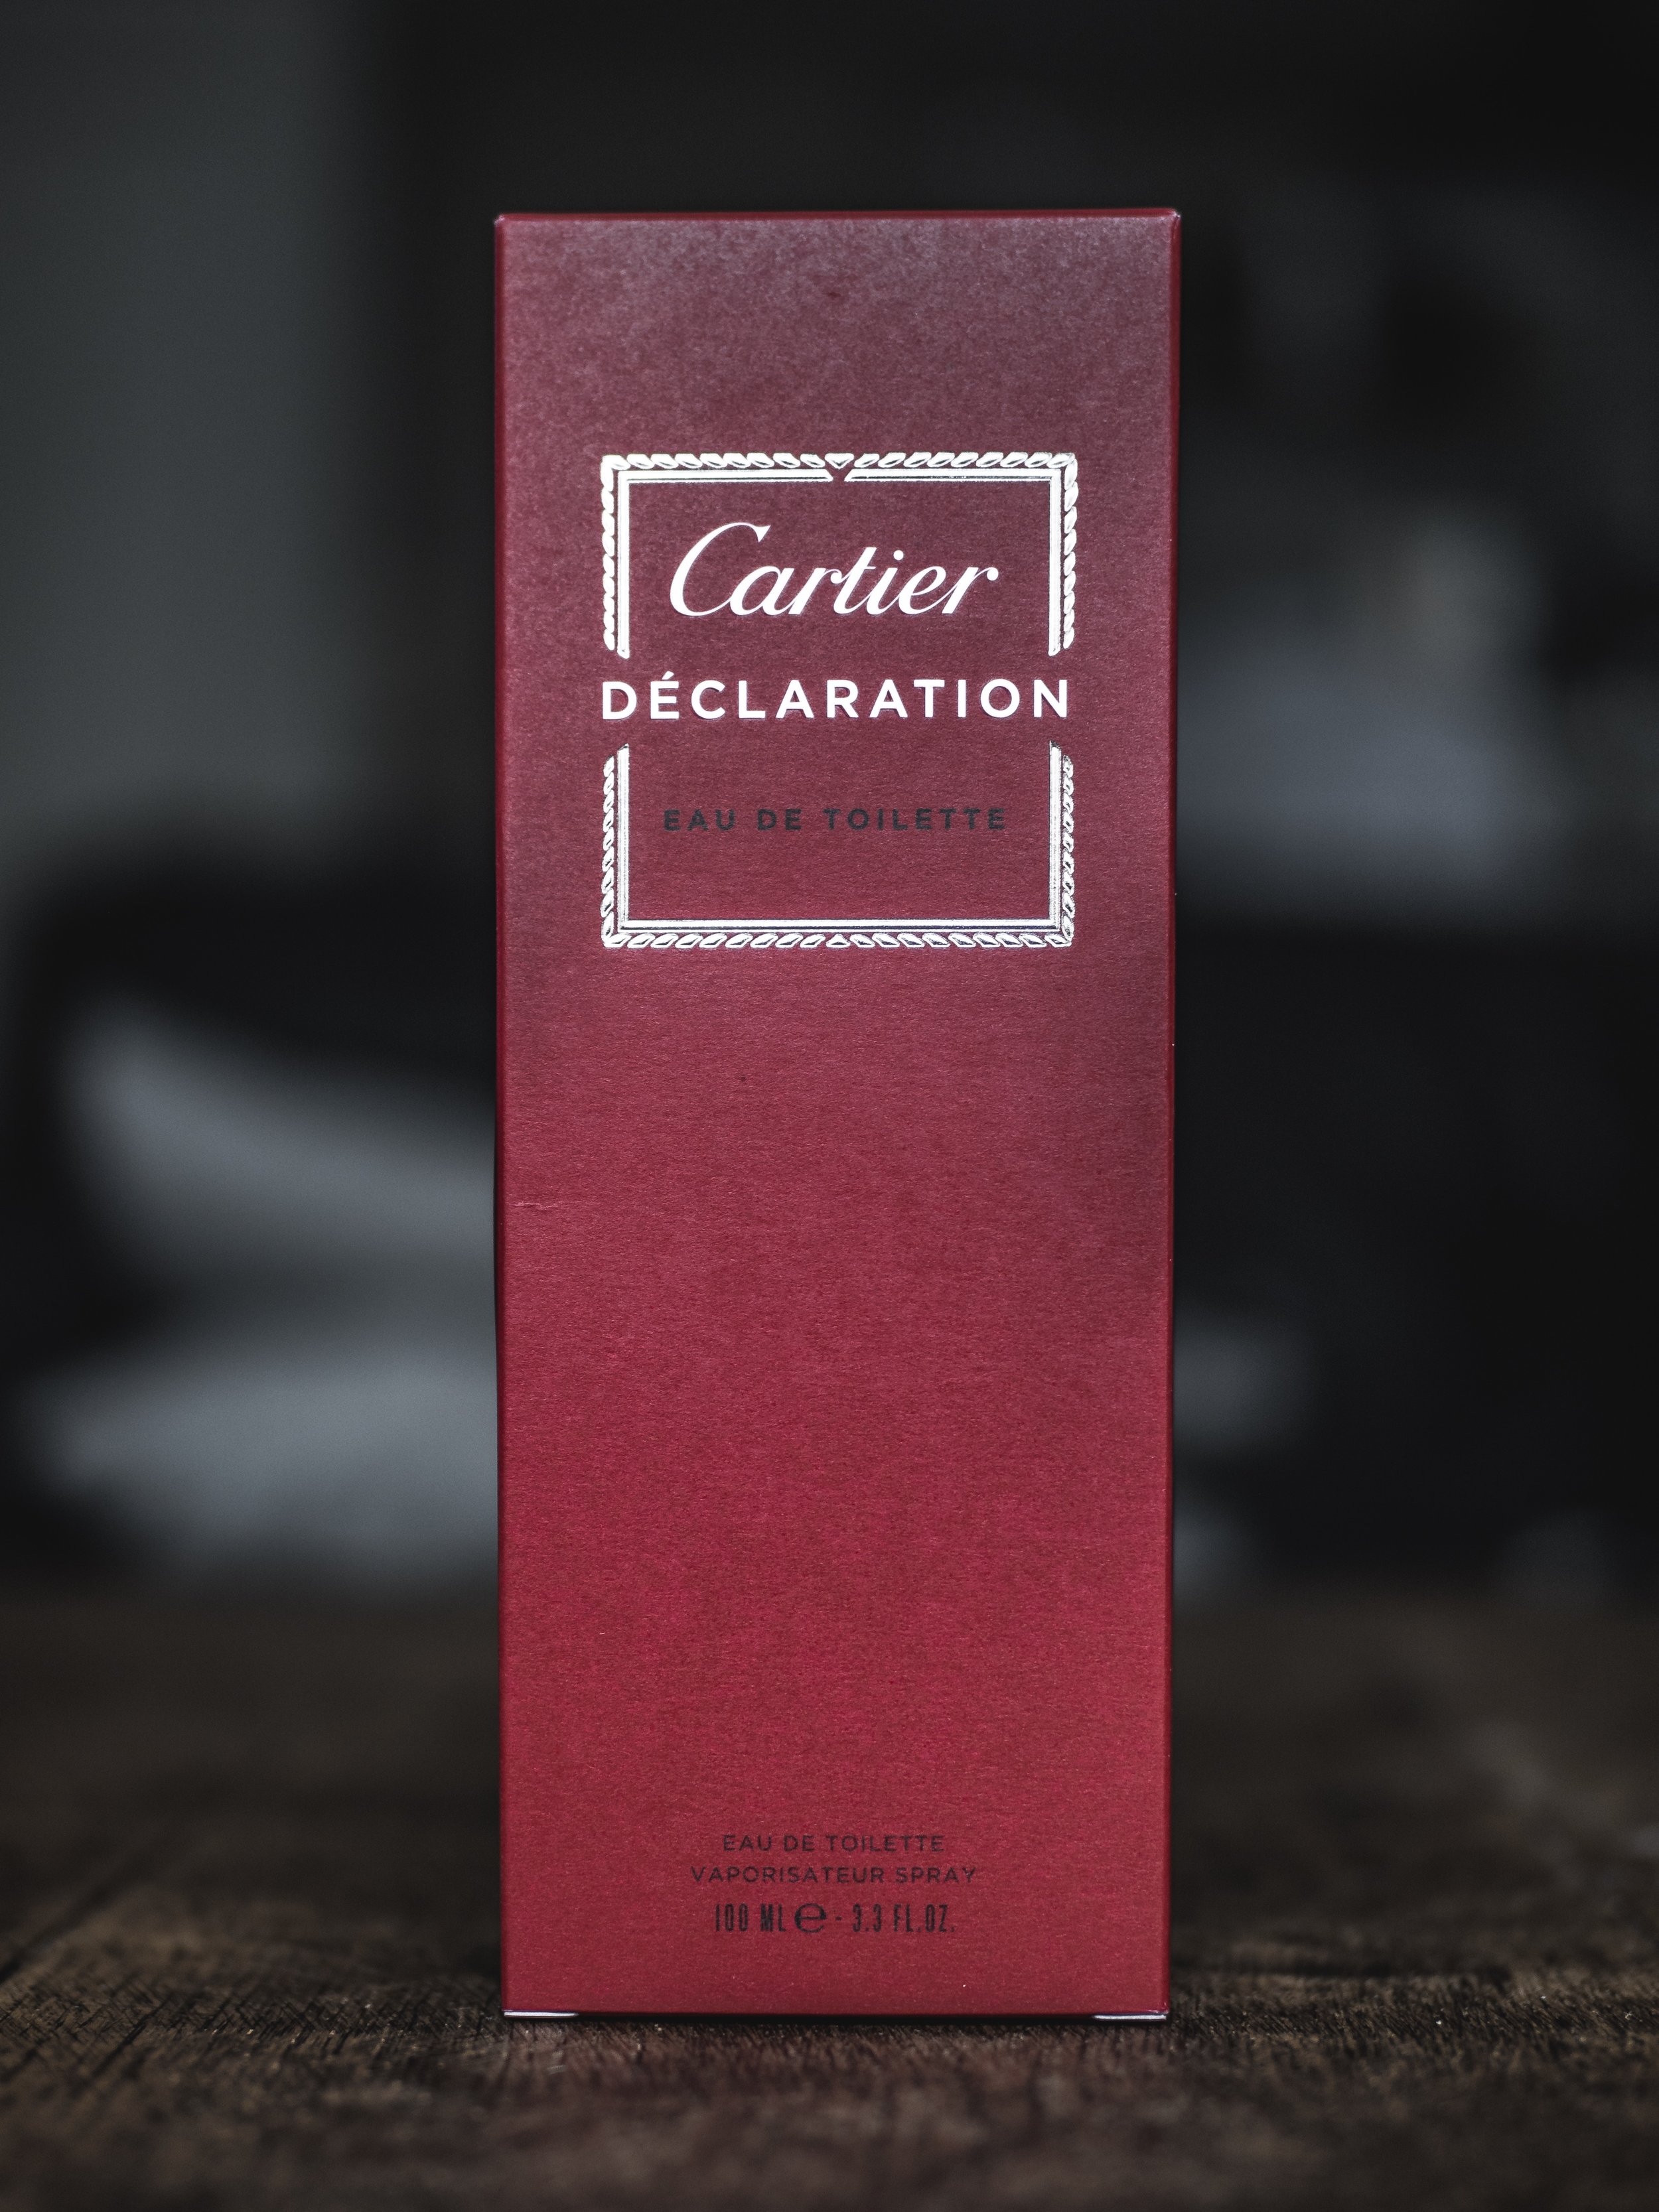 cartier declaration review